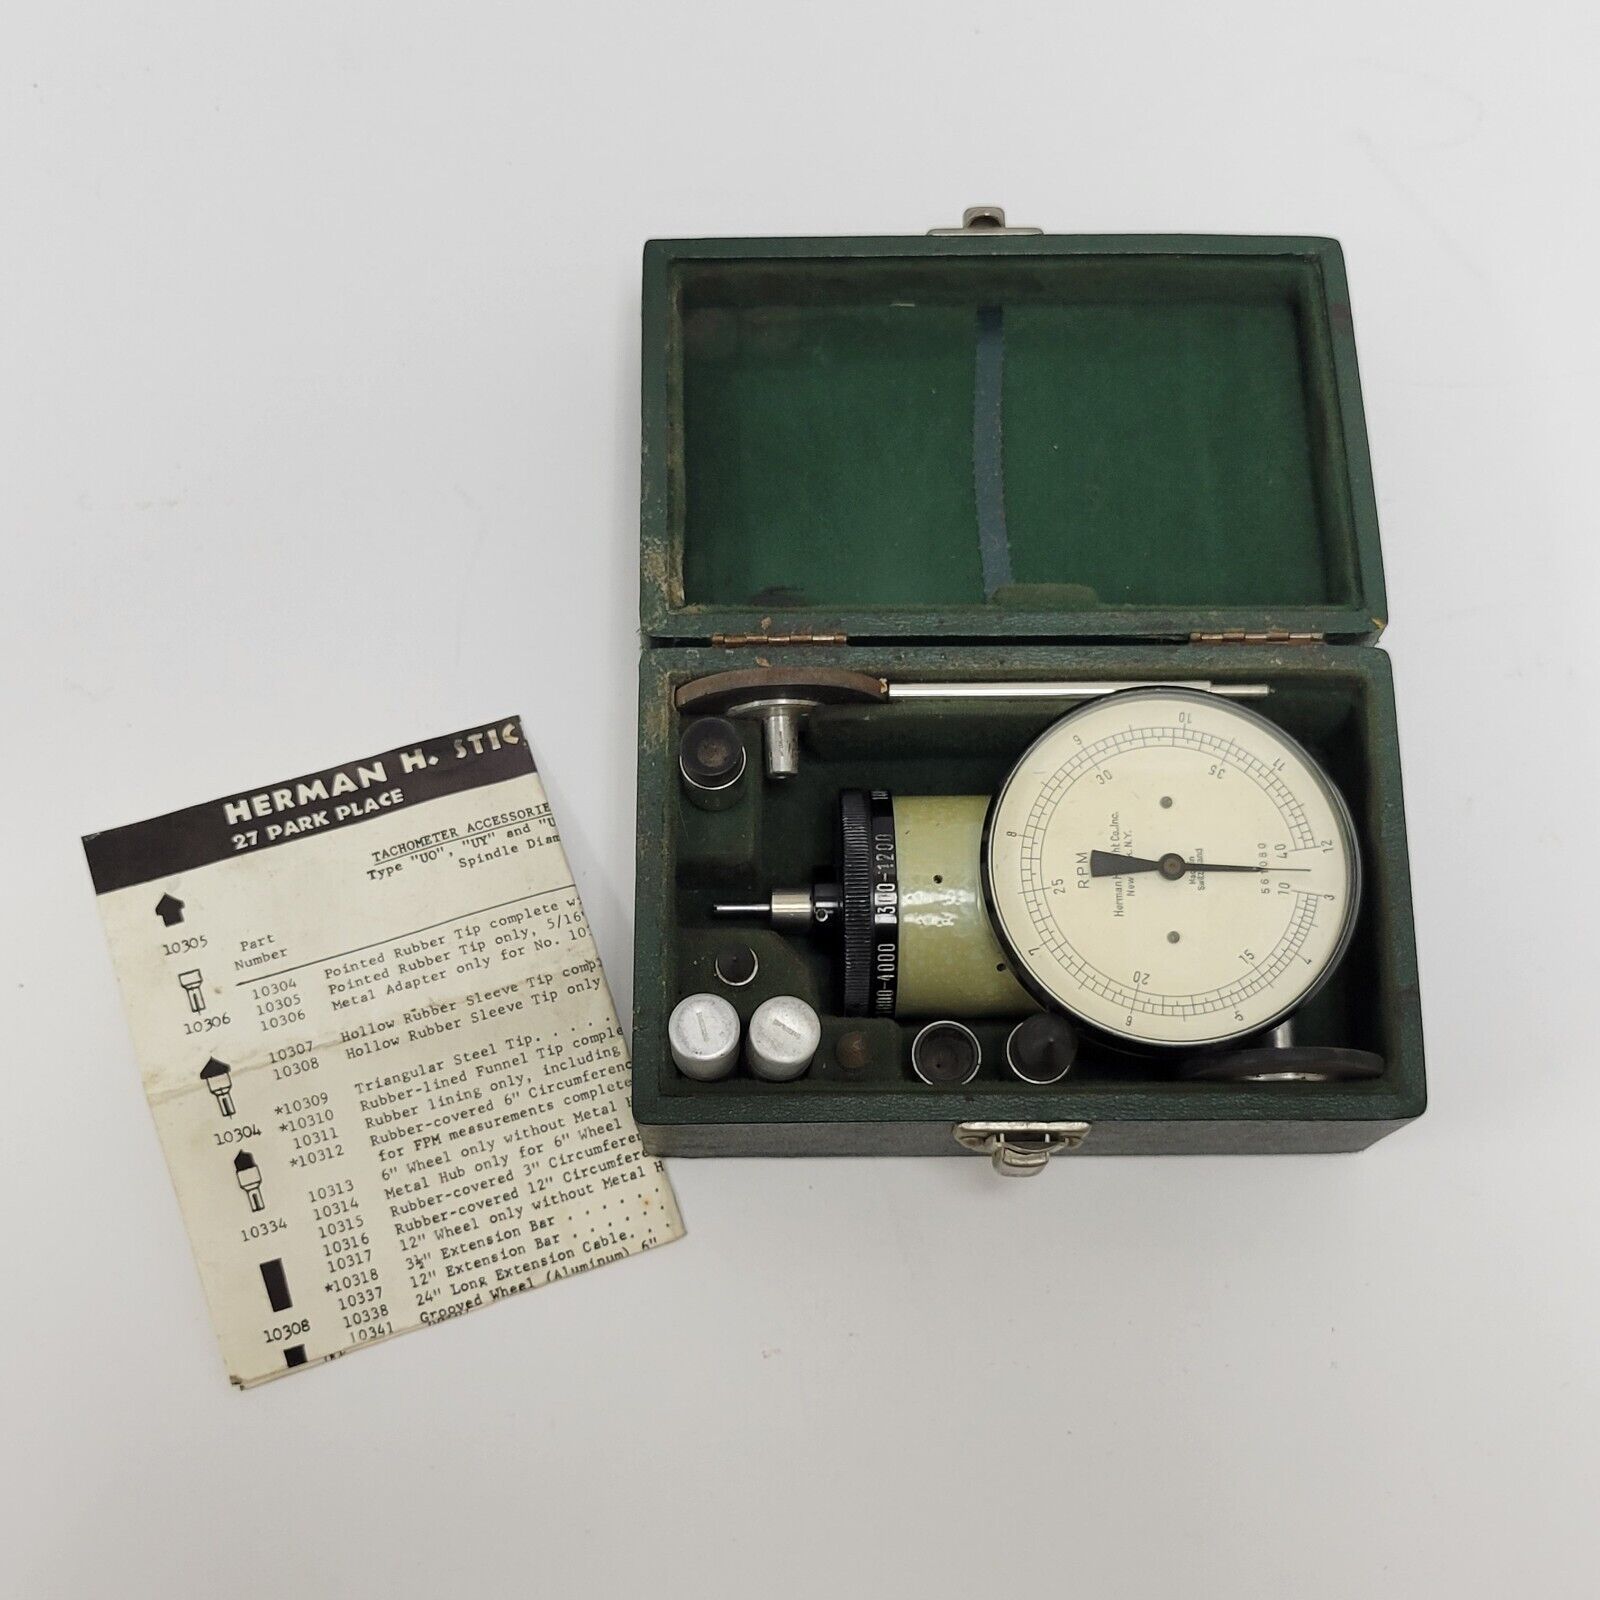 Vintage Herman H. Sticht Co Inc Handheld Tachometer With Case Machinisit CNC